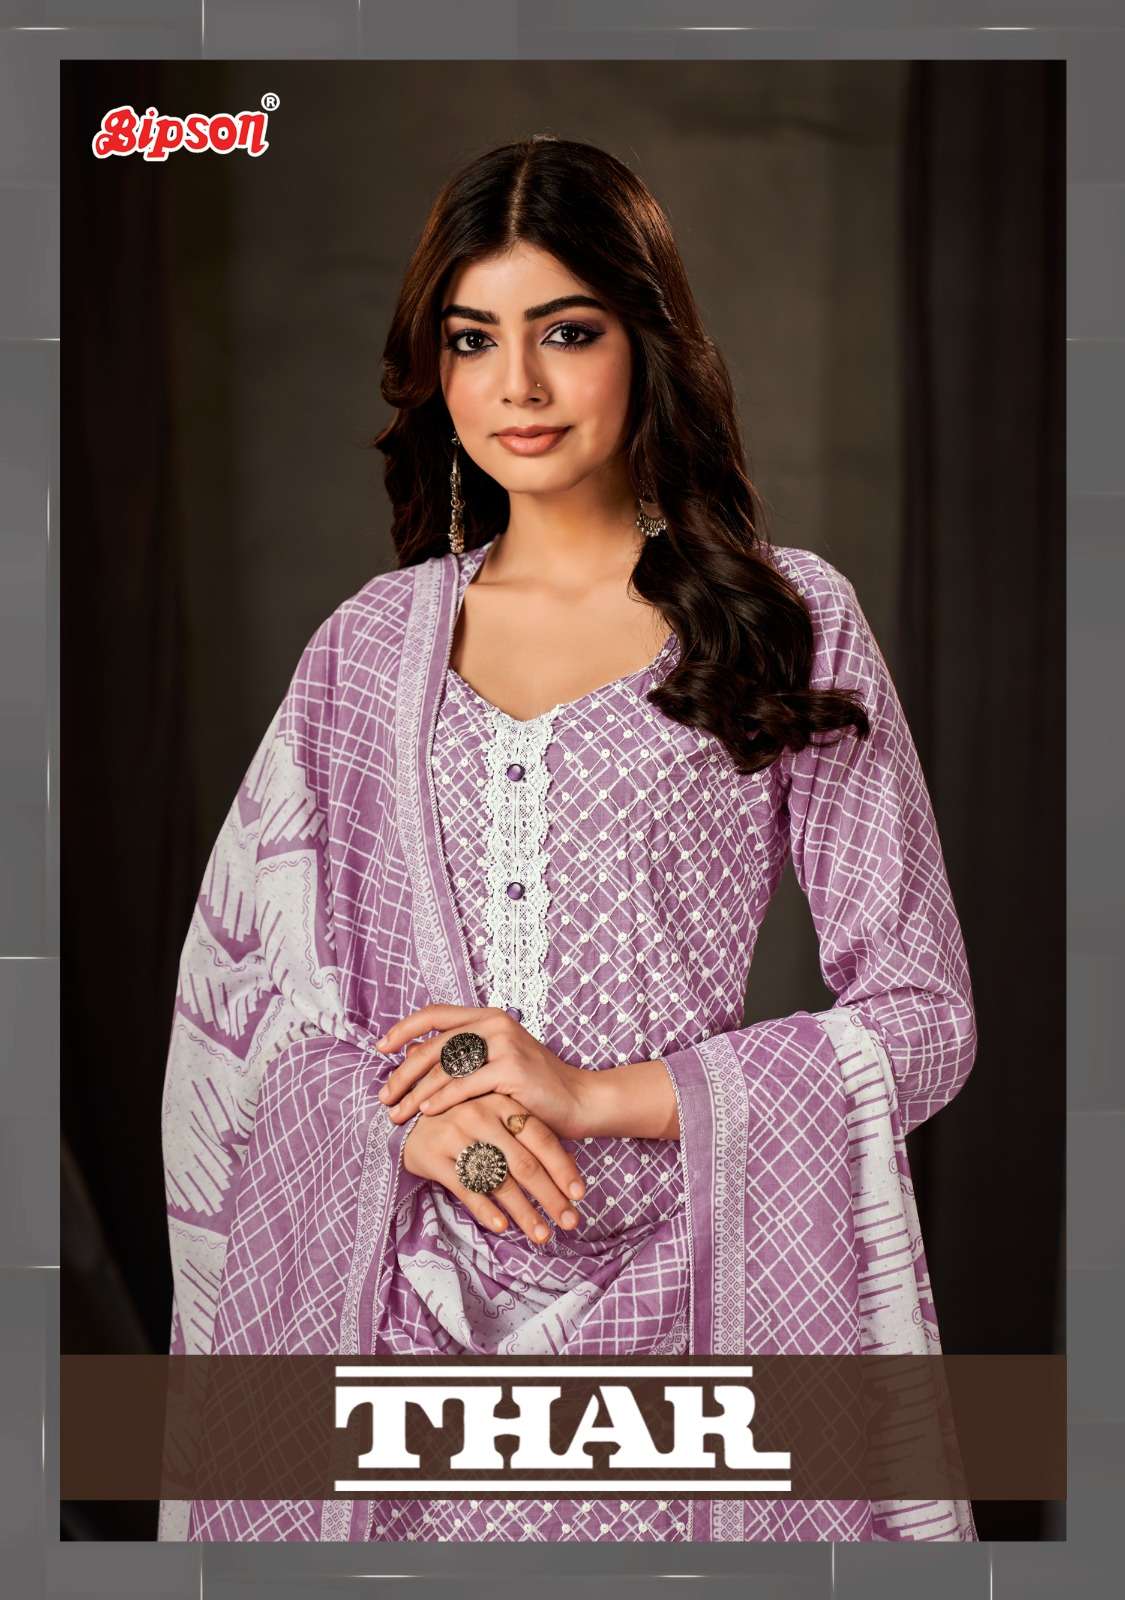 bipson prints thar 2194 series trendy designer salwar kameez catalogue online price surat 